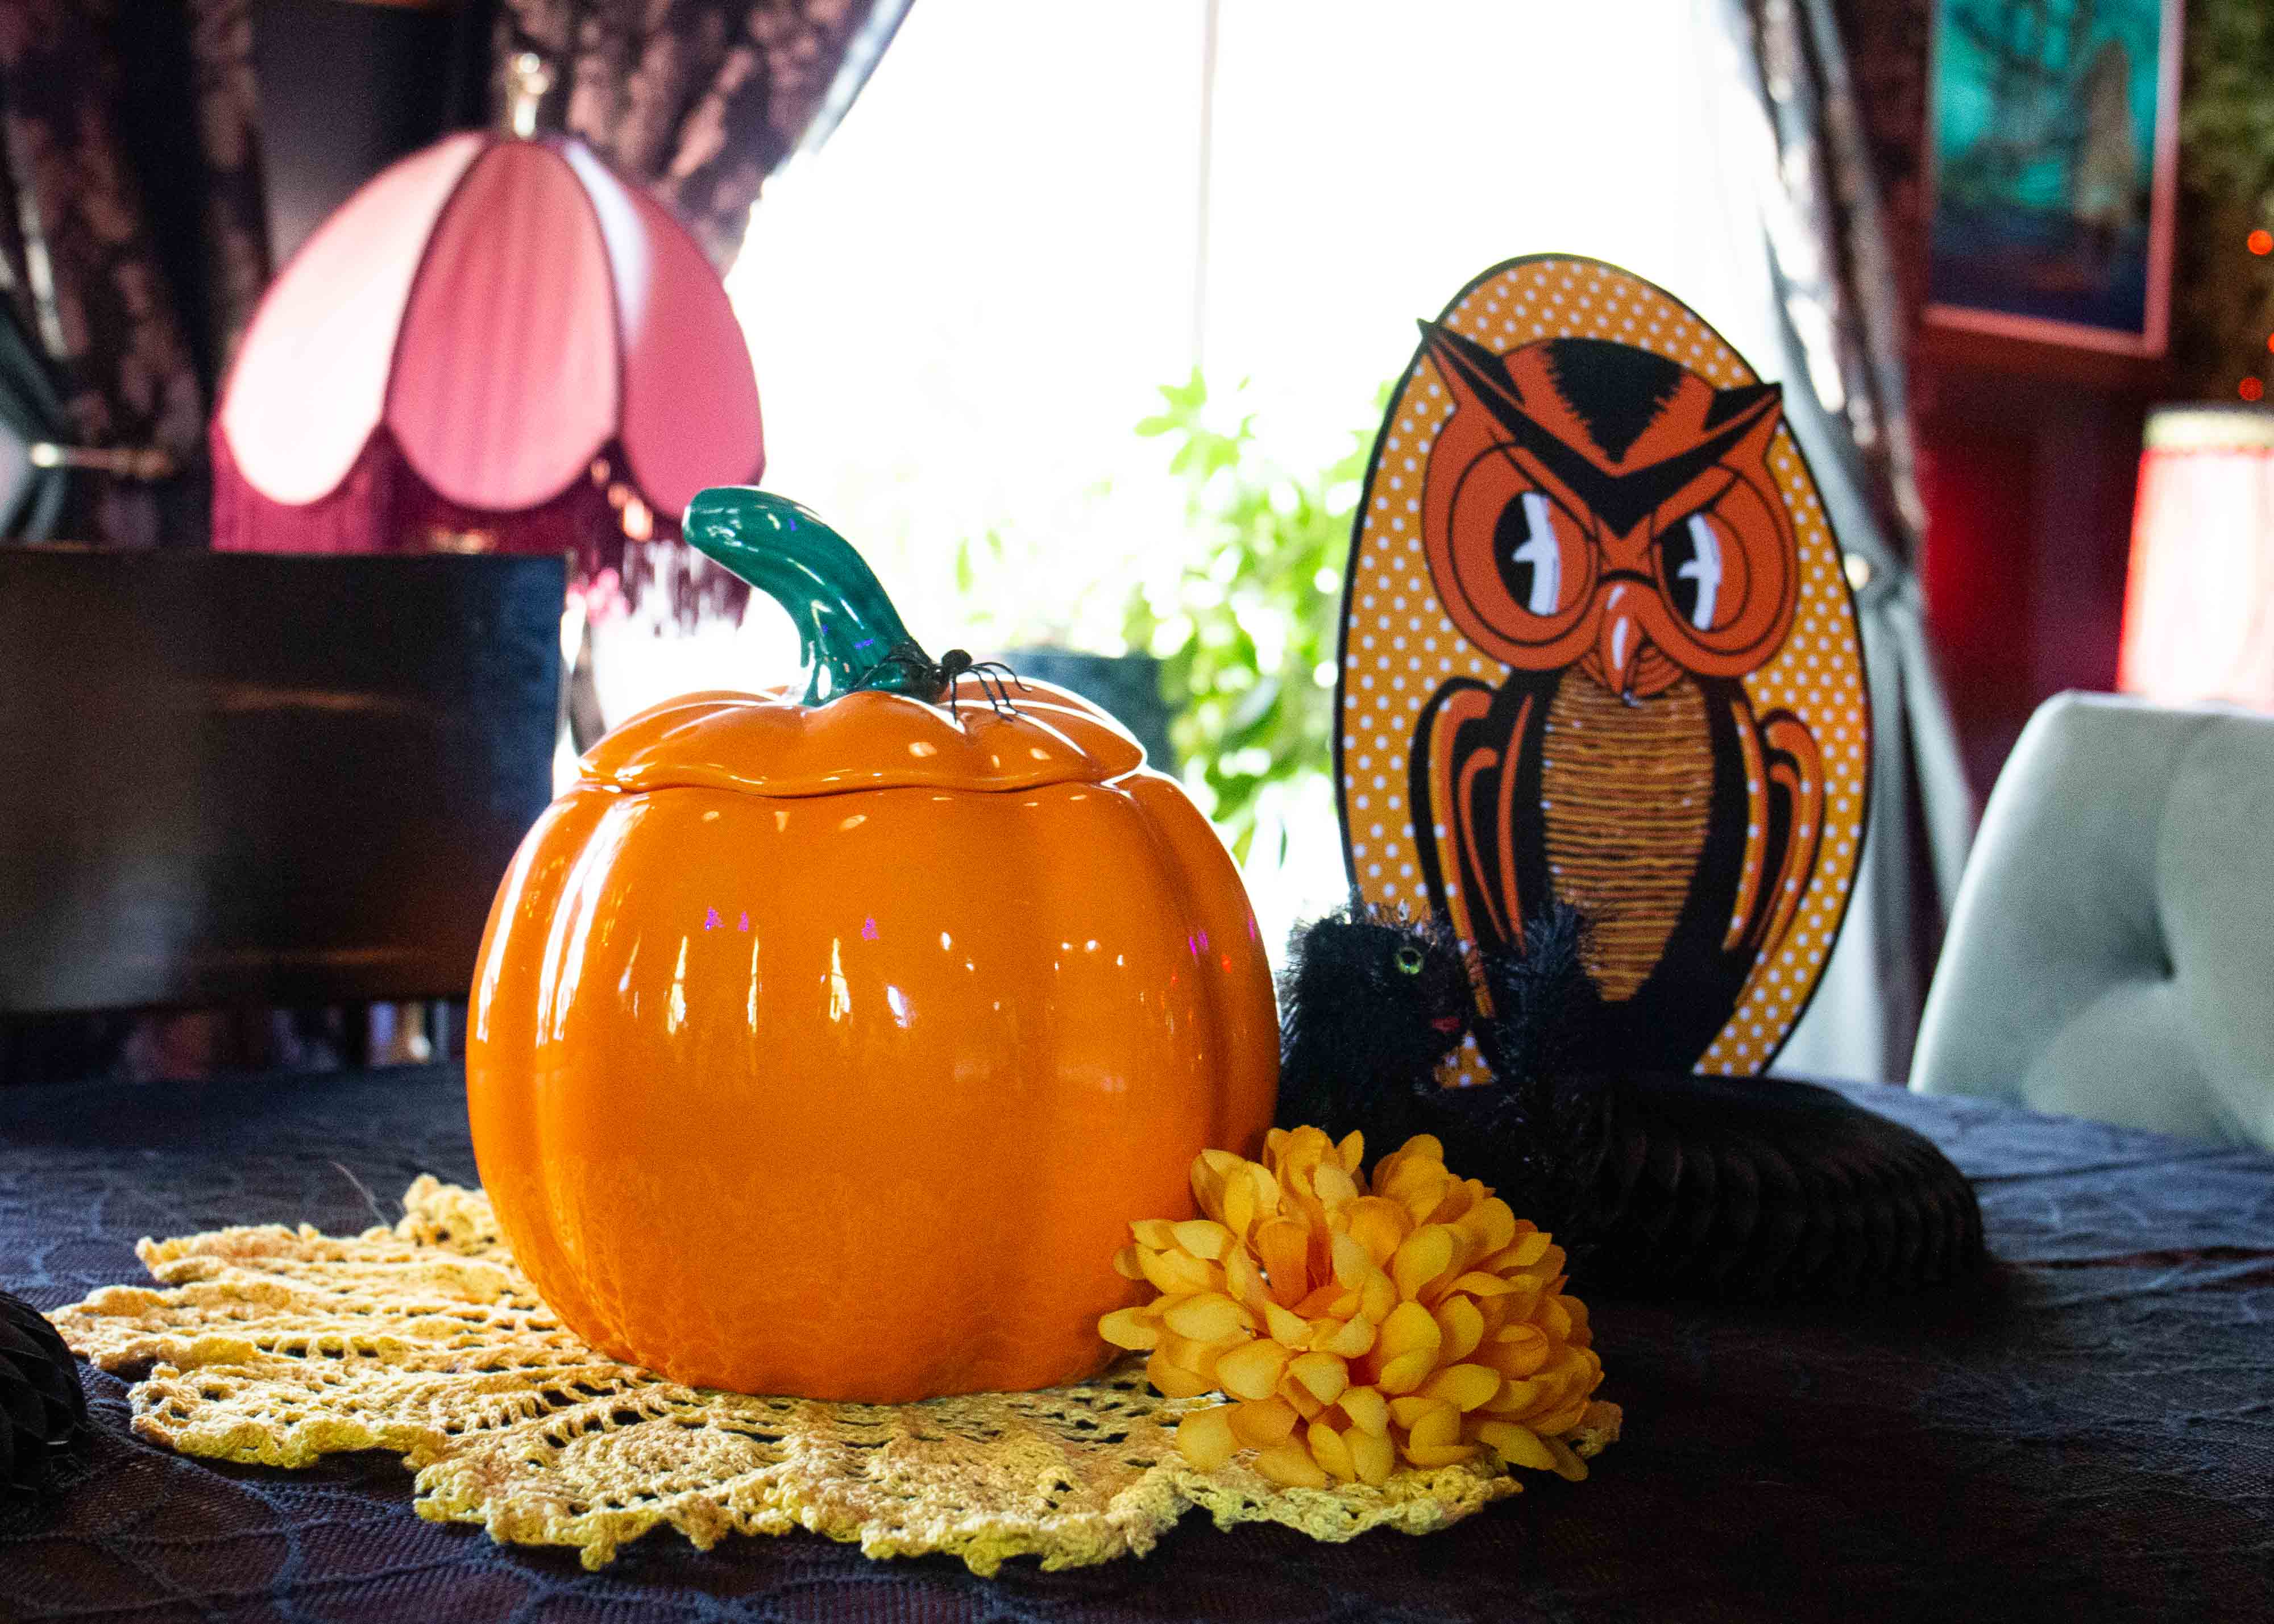 Halloween Party Tree Pumpkin Owl Cat Area Rugs Soft Living Room Round Floor Mat